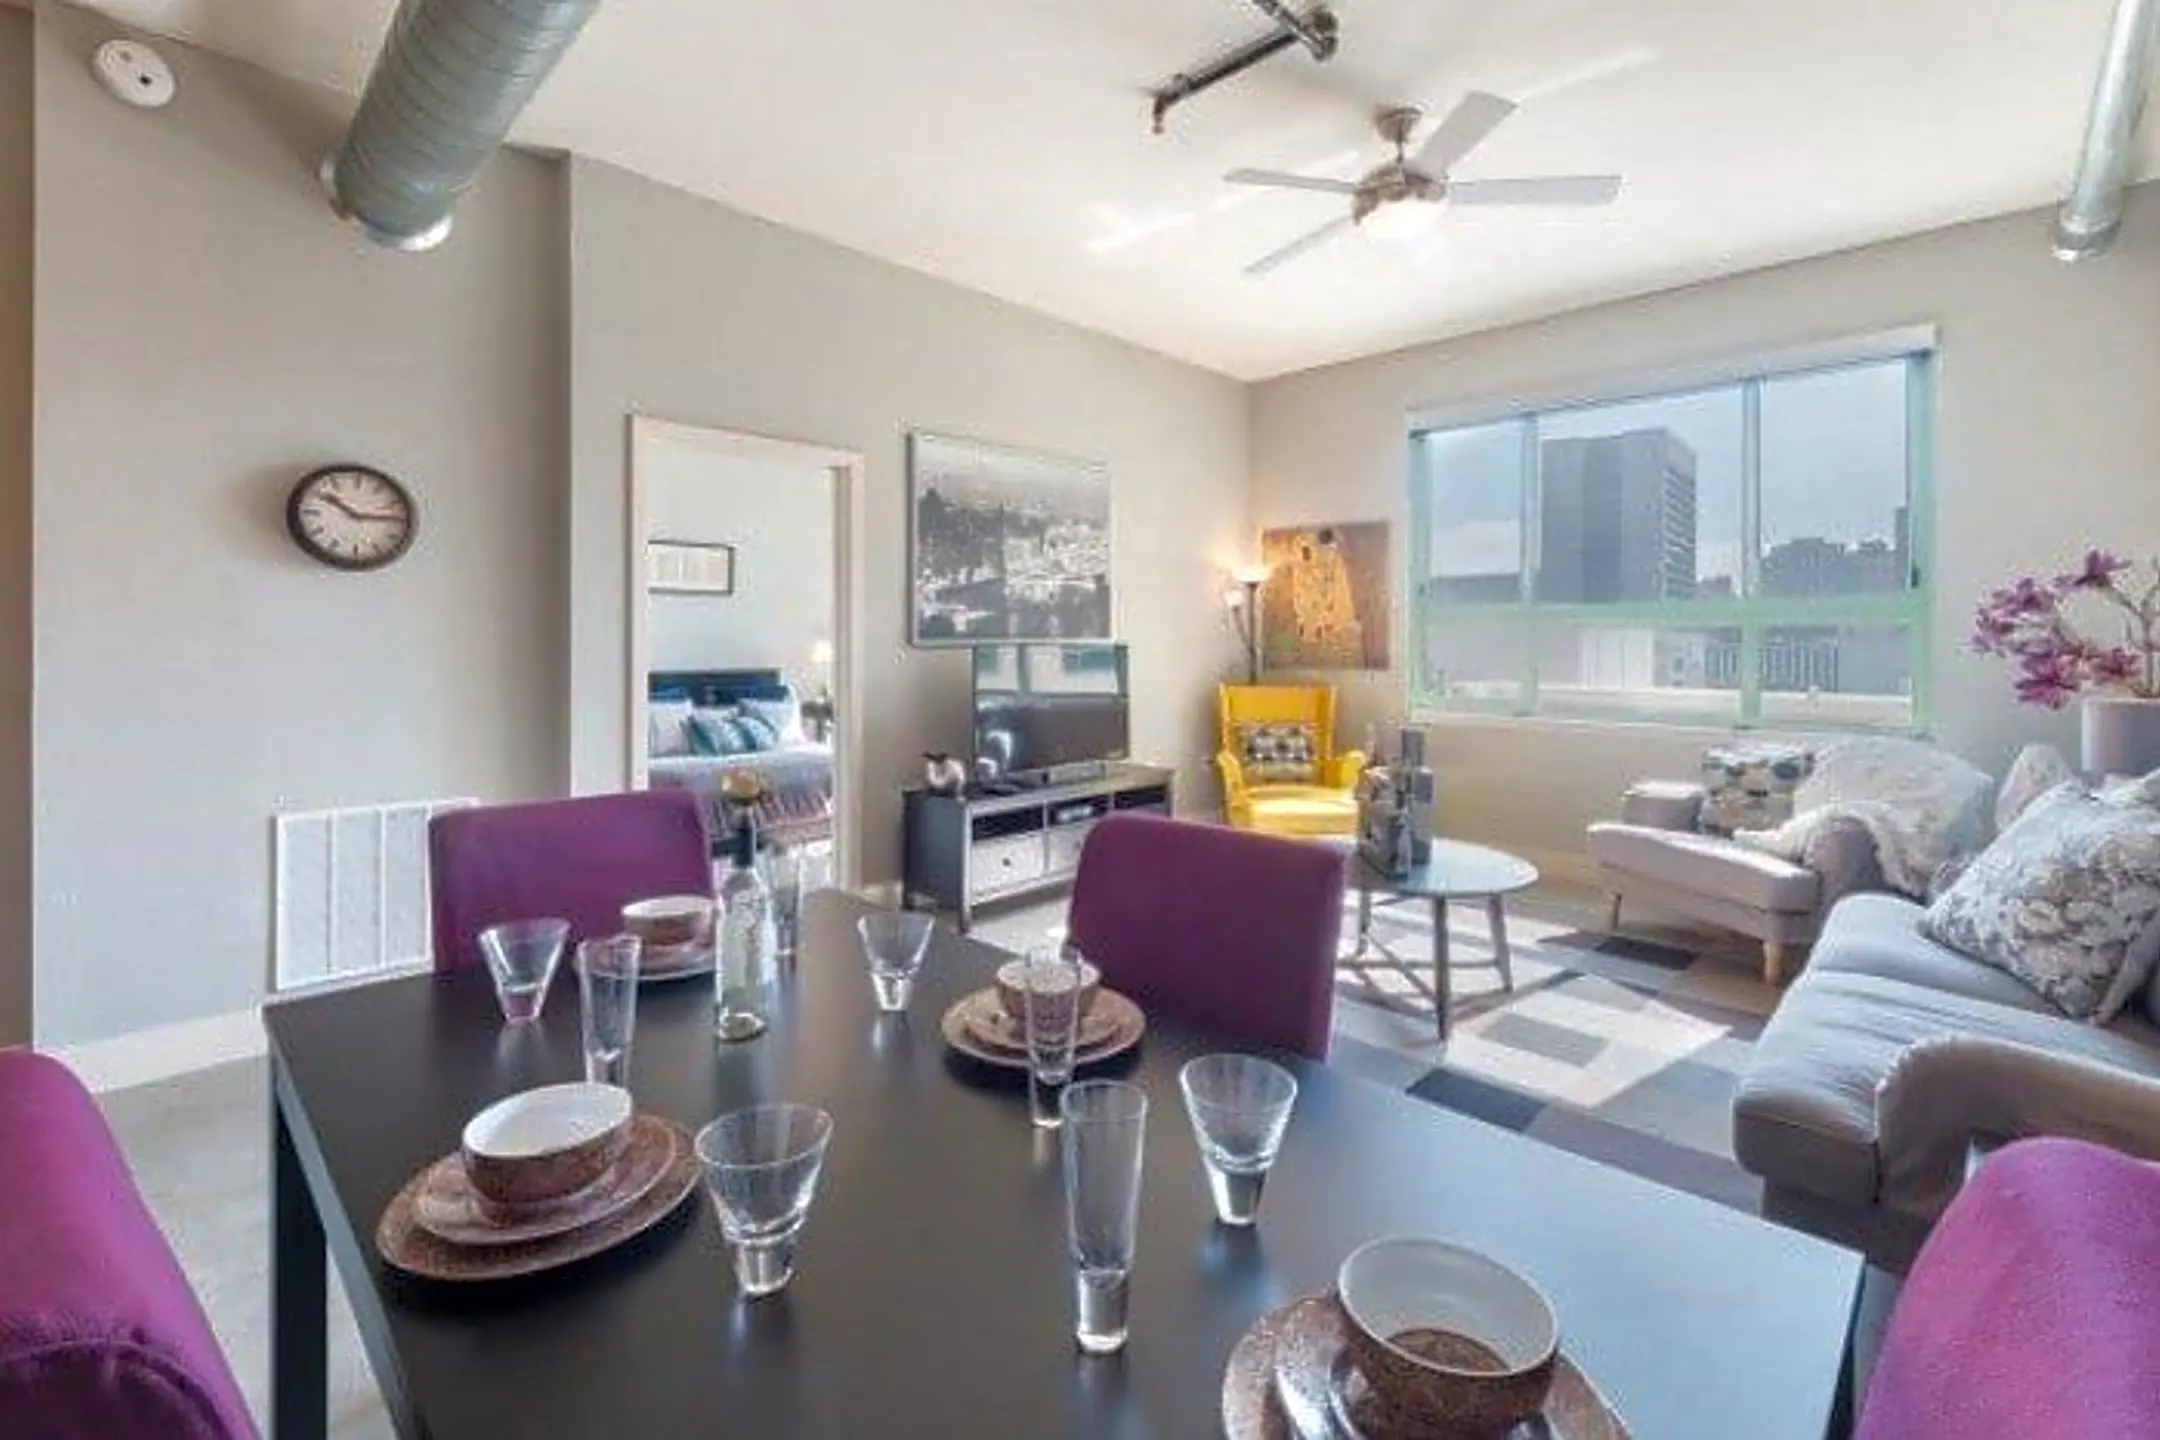 Dining Room - 78215 Luxury Properties - San Antonio, TX